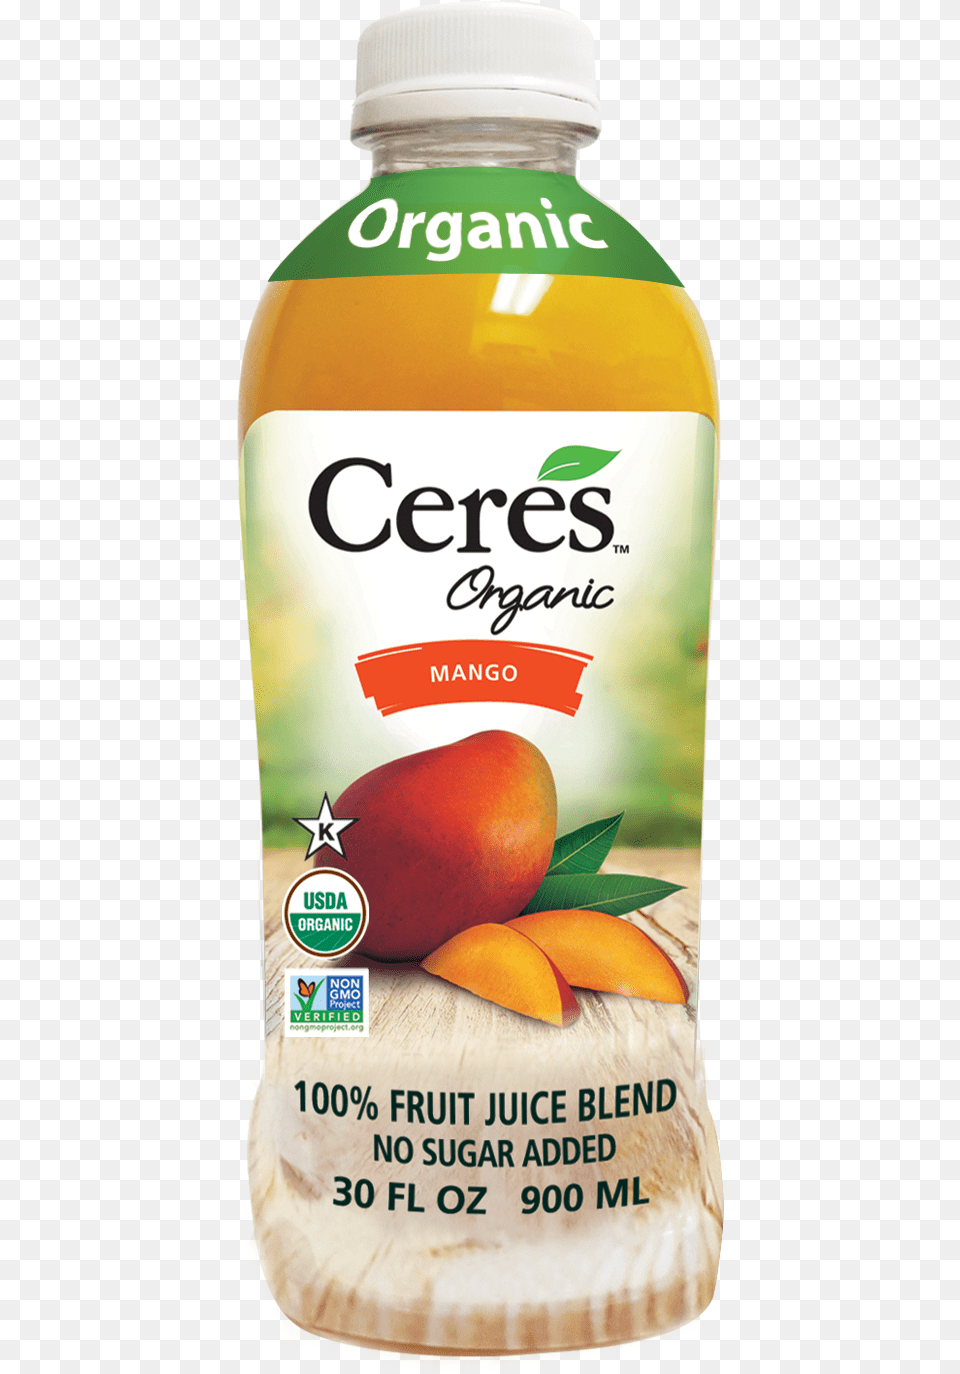 Mango Fruit Juice Blend Ceres Organic Pear Juice, Beverage, Produce, Citrus Fruit, Food Png Image